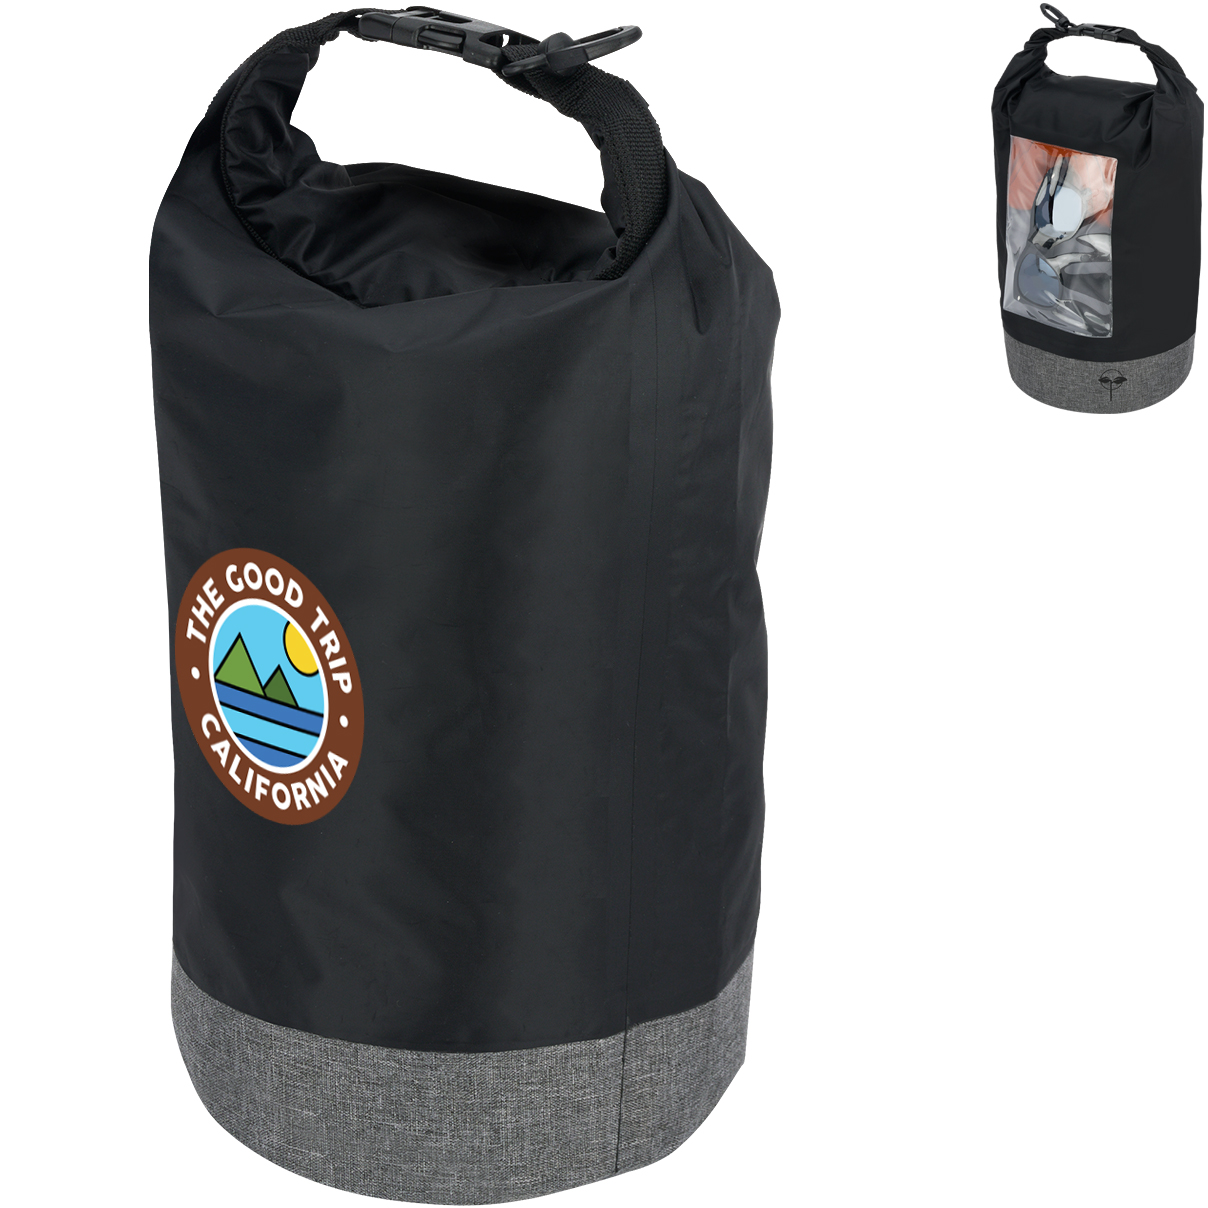 Generic Large Fishing Backpack Waterproof Camera Bag Green